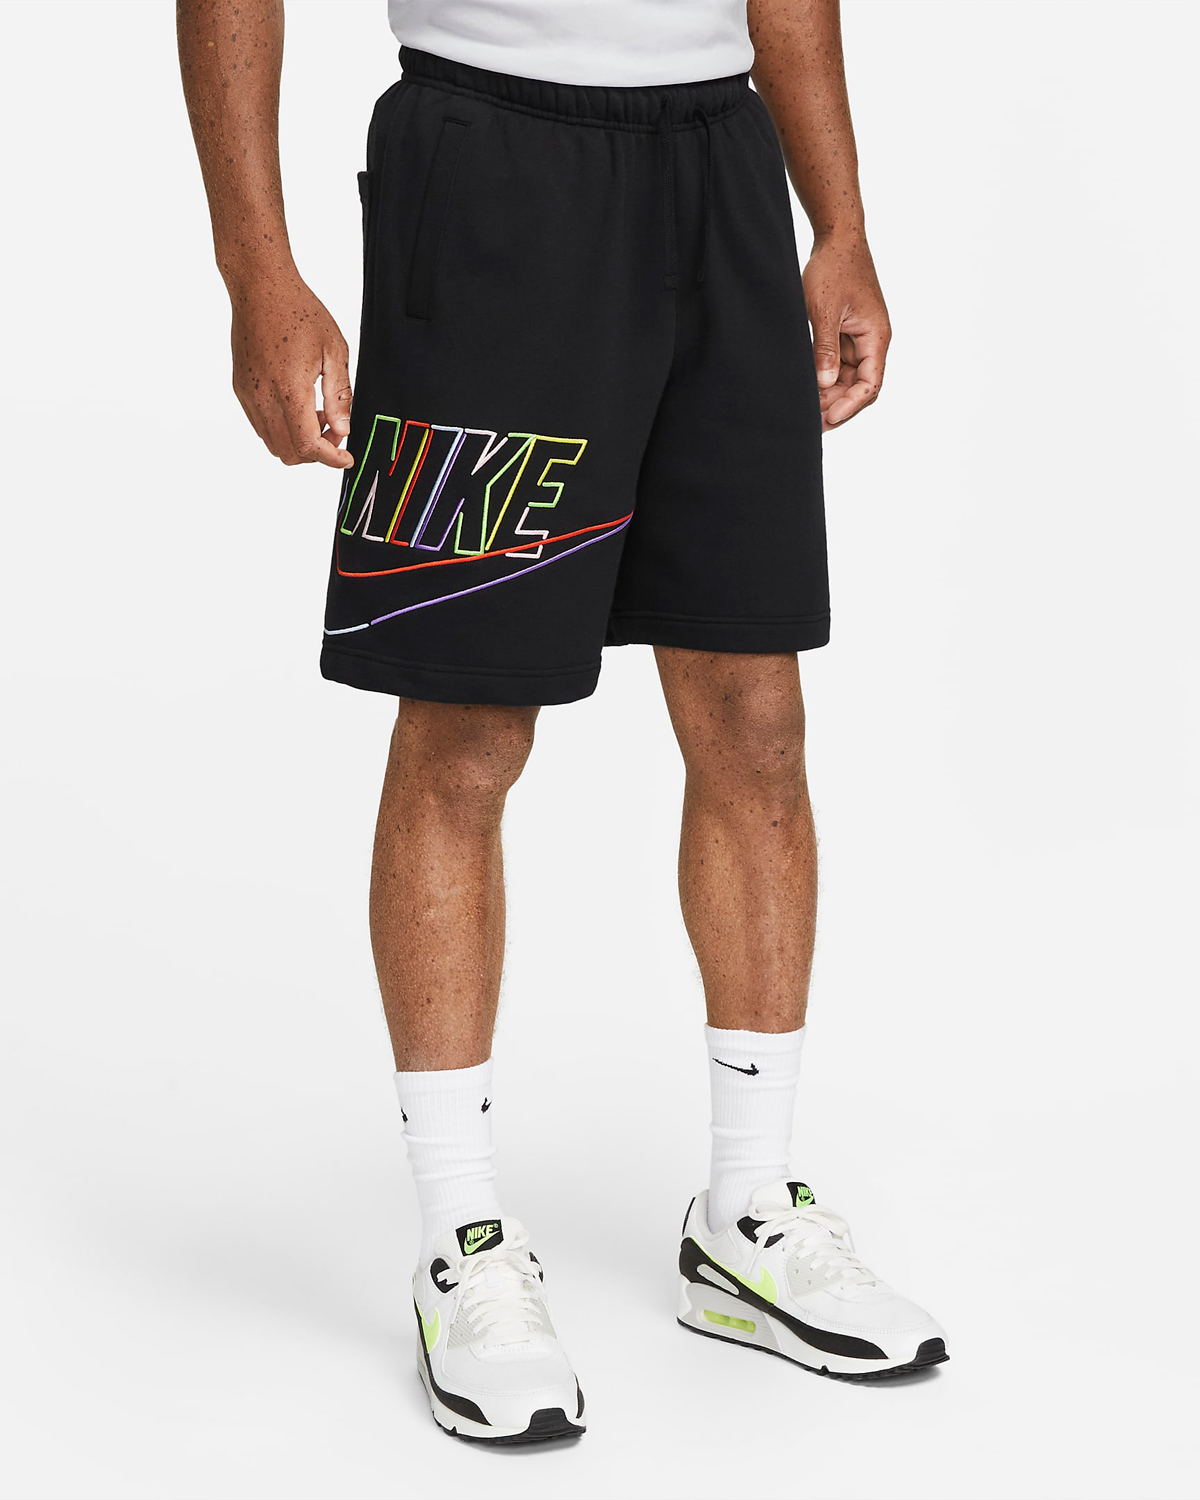 Nike-Club-Fleece-Shorts-Black-Multi-Color